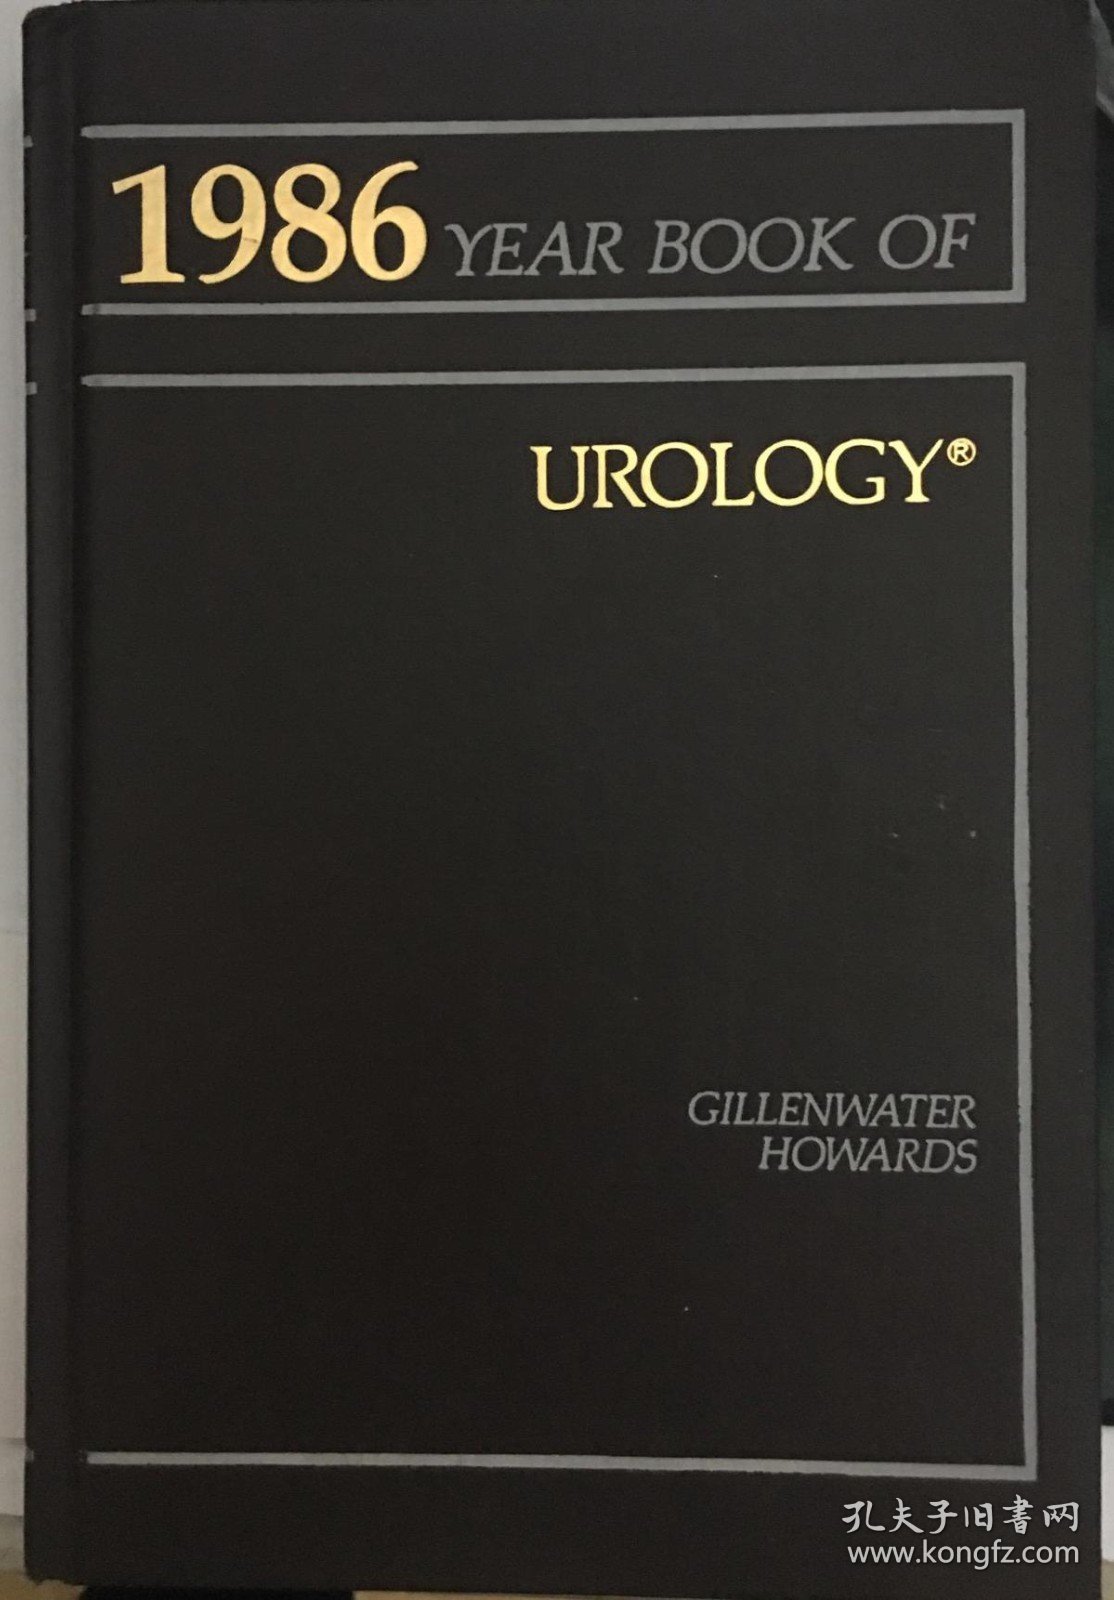 Year Book of Urology 1986 泌尿学年鉴1986